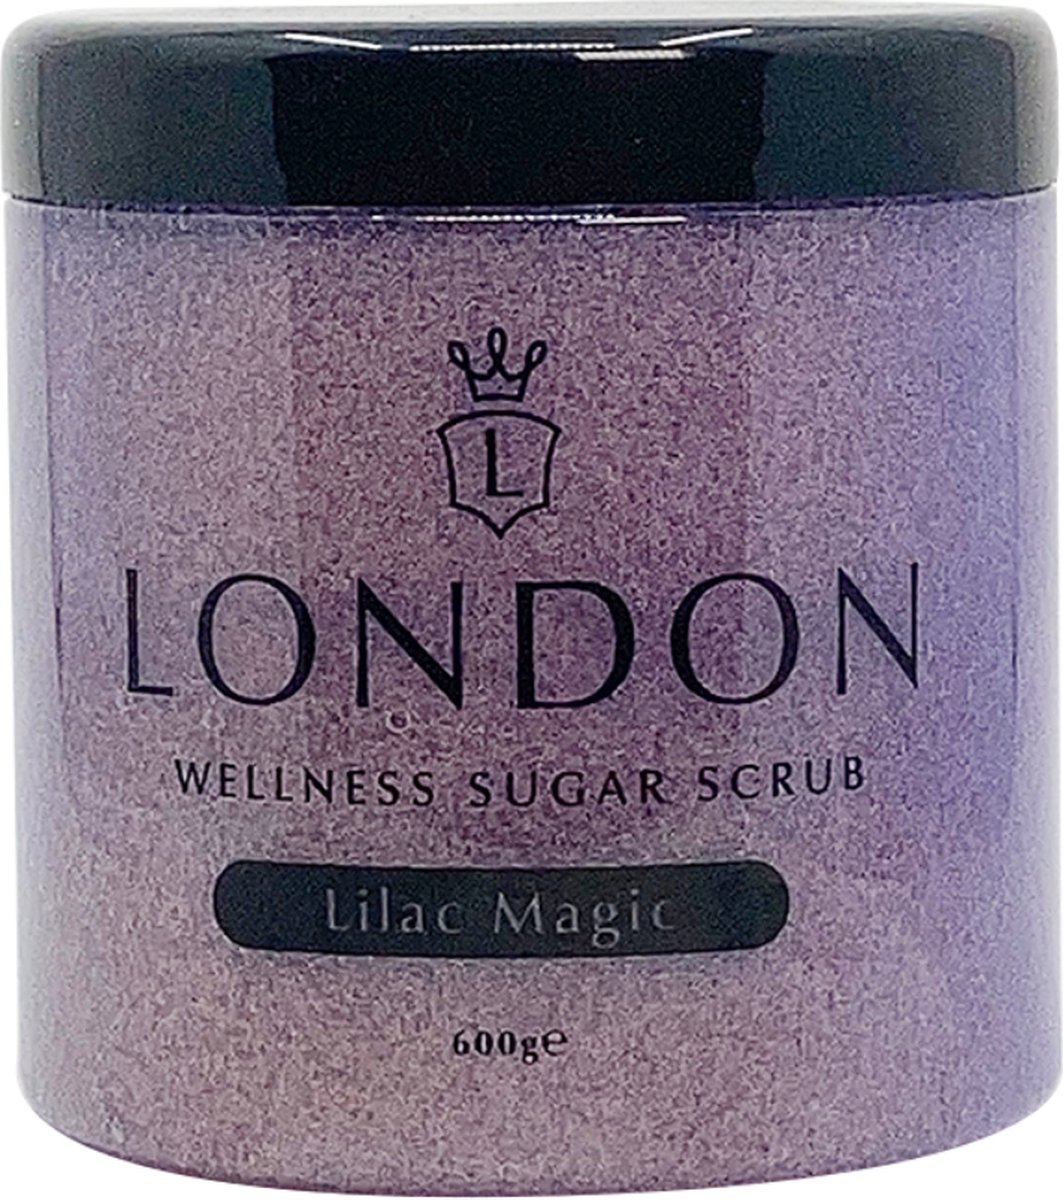 LONDON WELLNESS SUGAR SCRUB - LILAC MAGIC - 600g